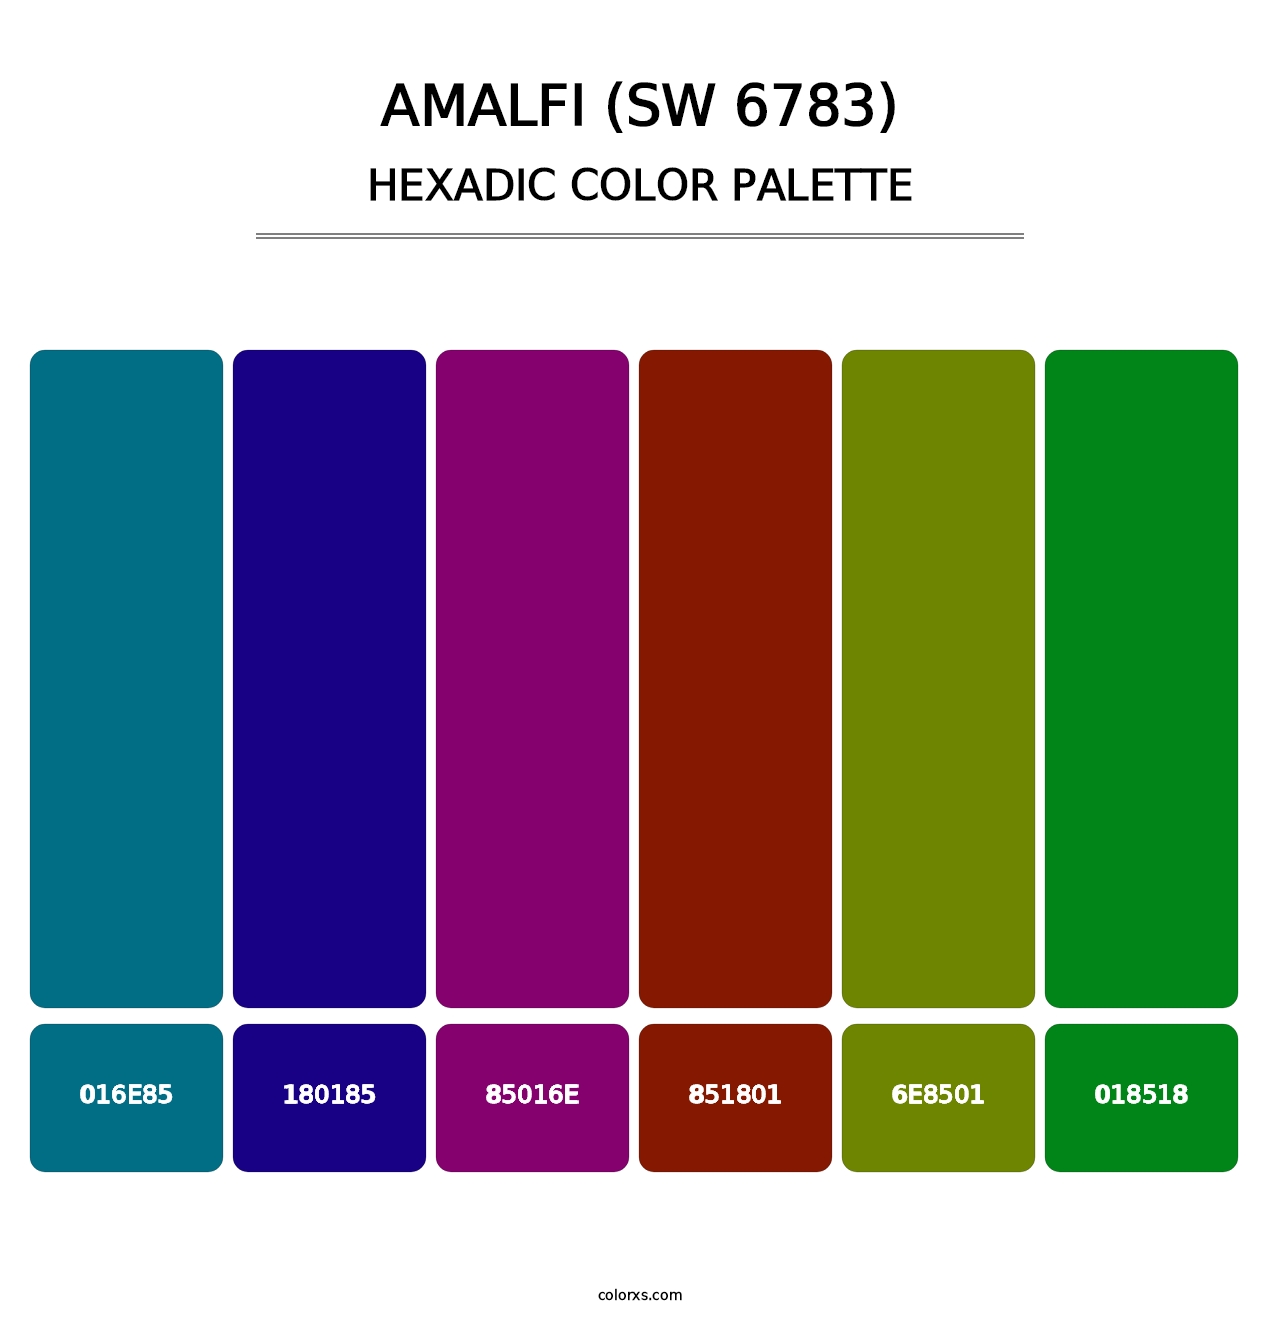 Amalfi (SW 6783) - Hexadic Color Palette